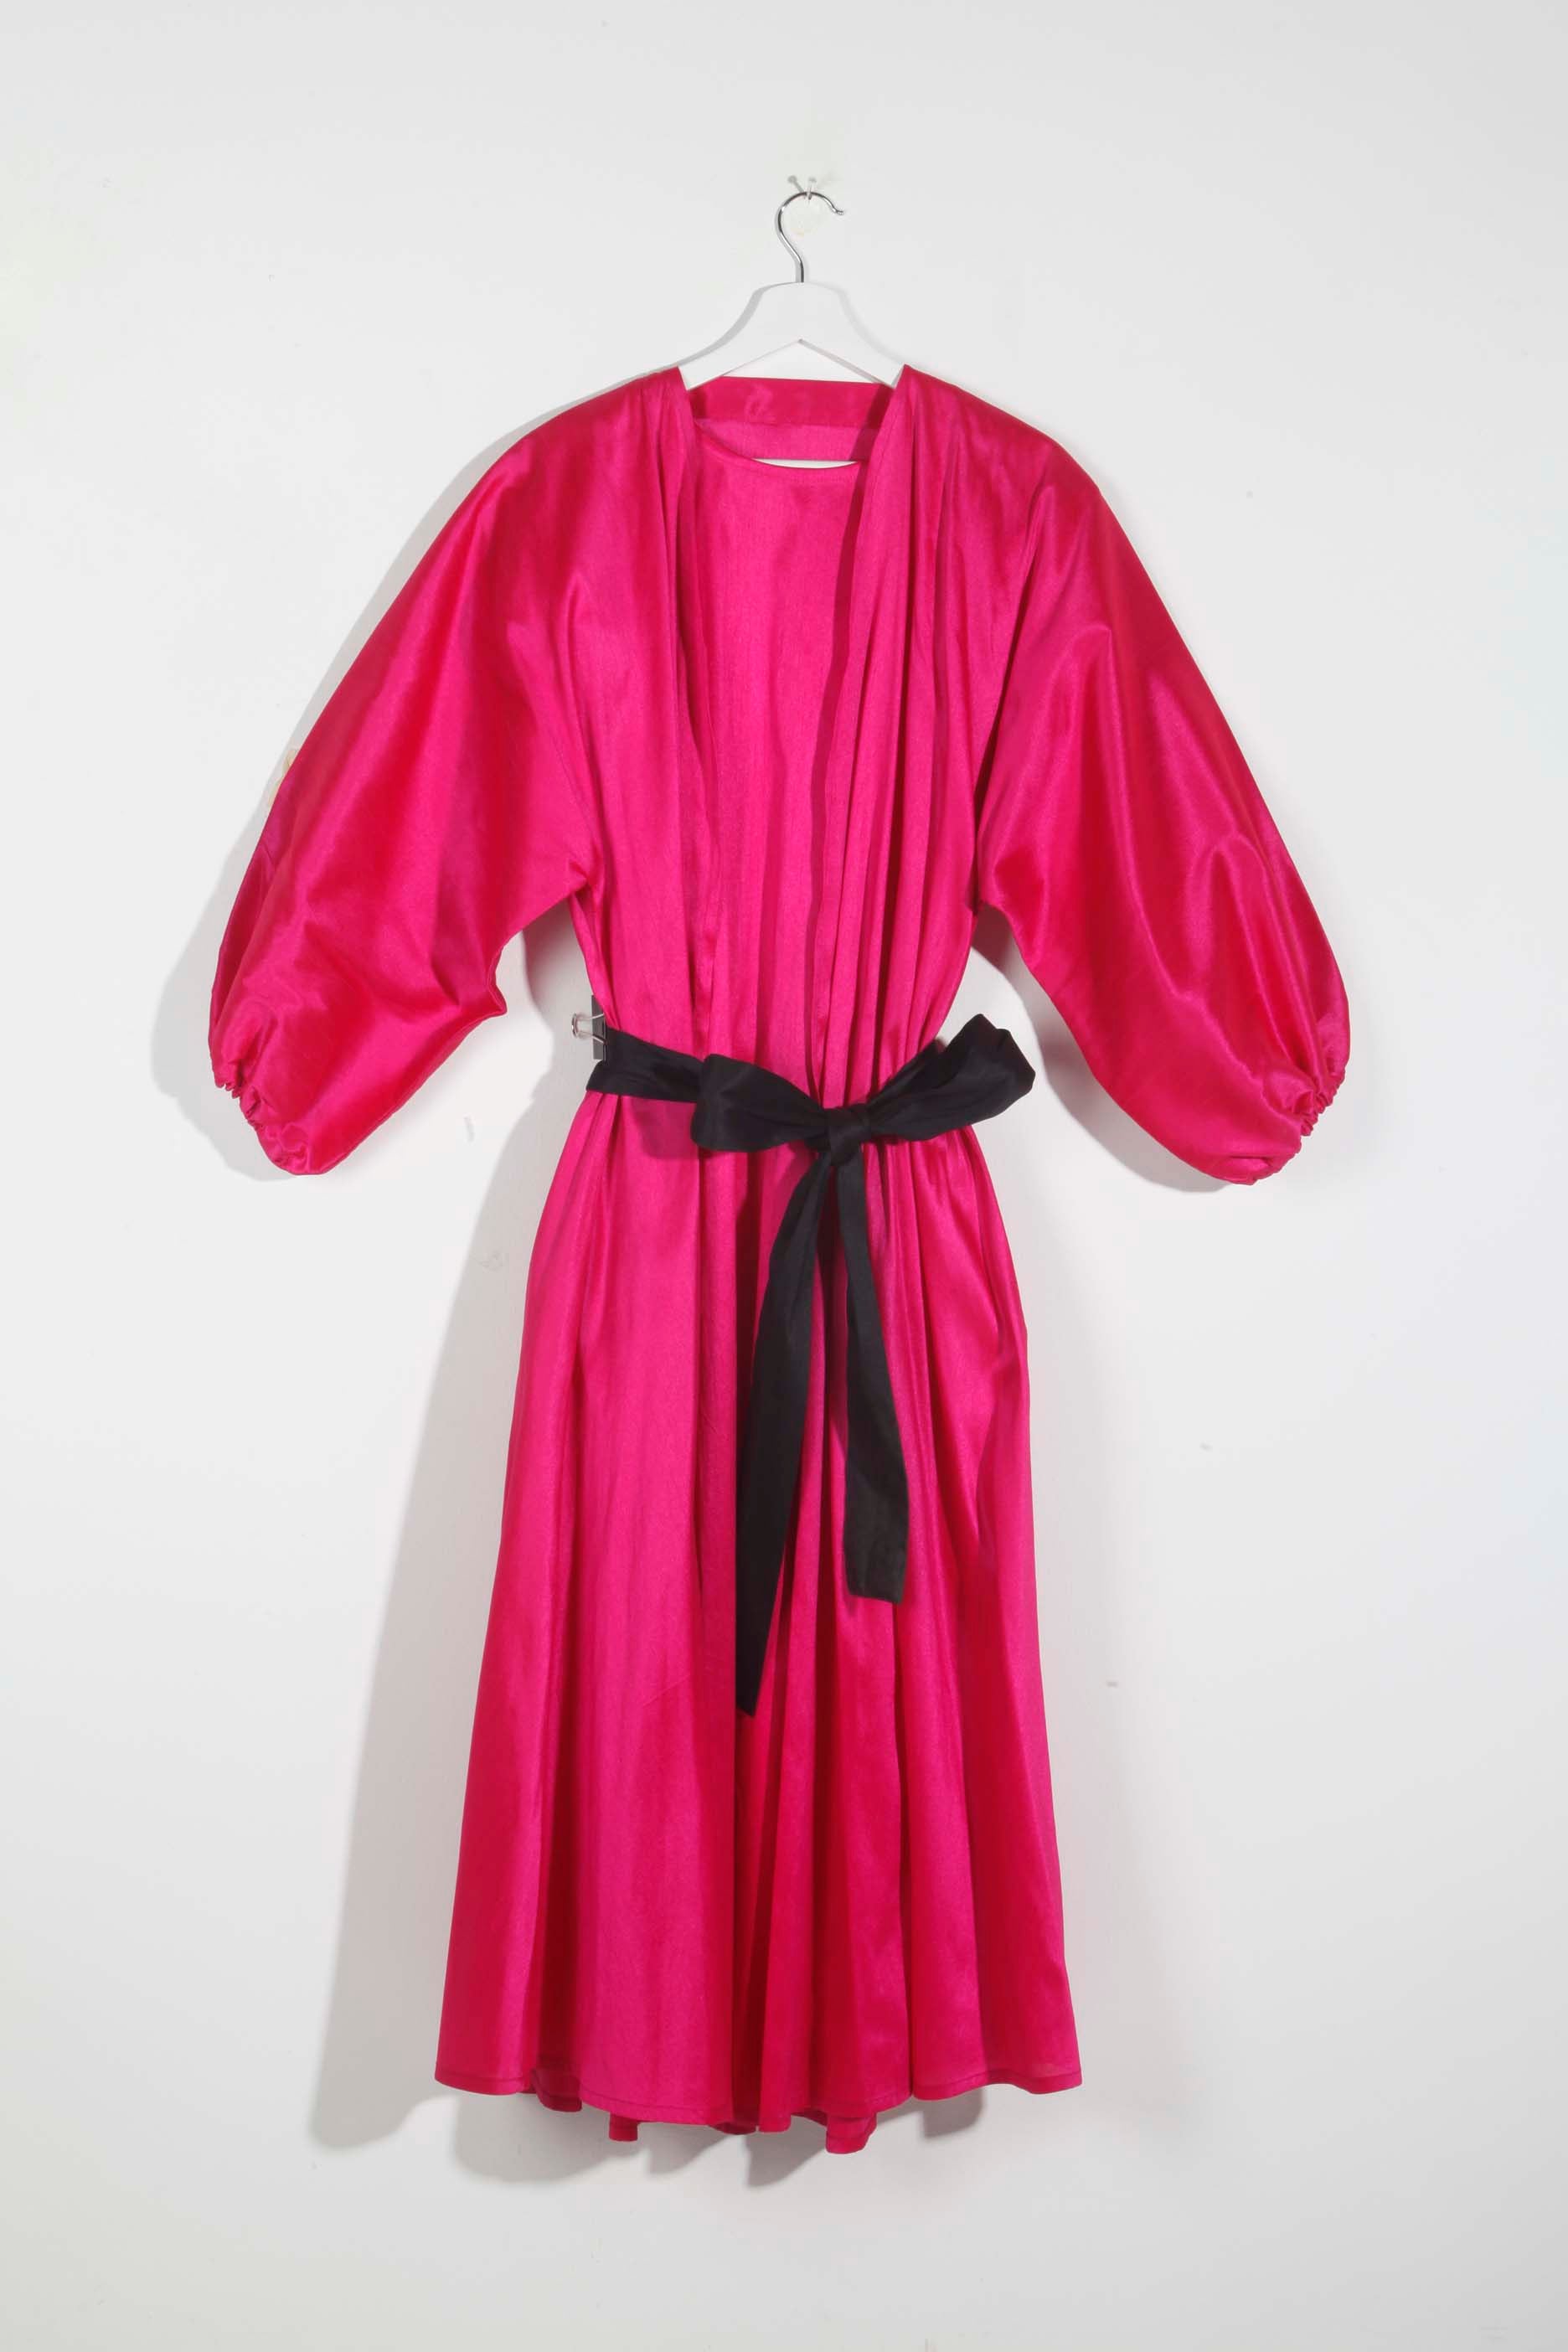 Hot Pink Abaya and Underdress